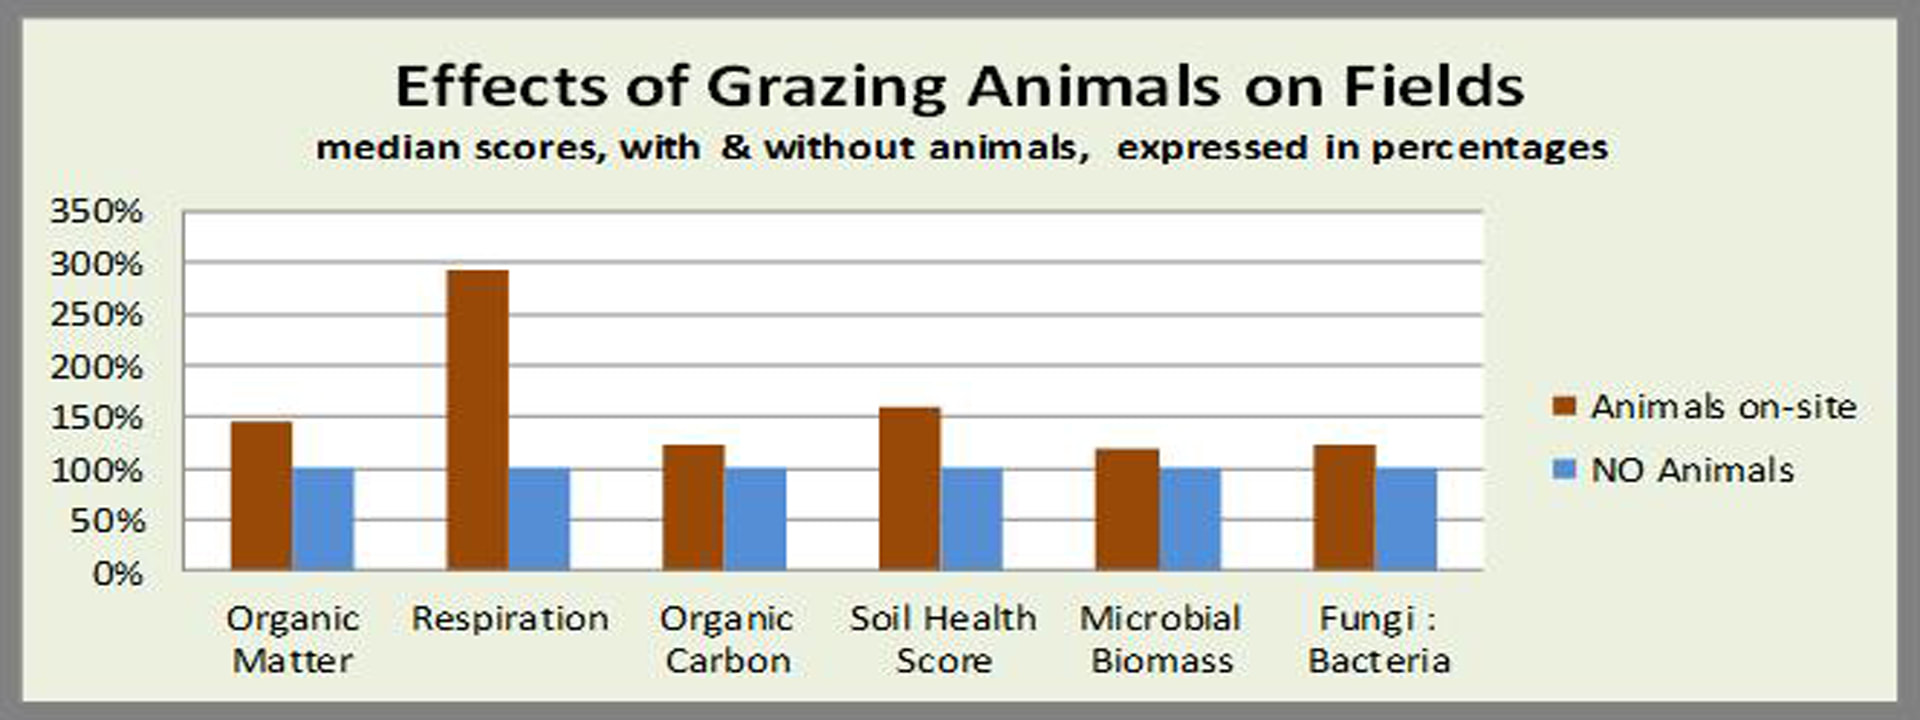 Grazing Animals improve soil health